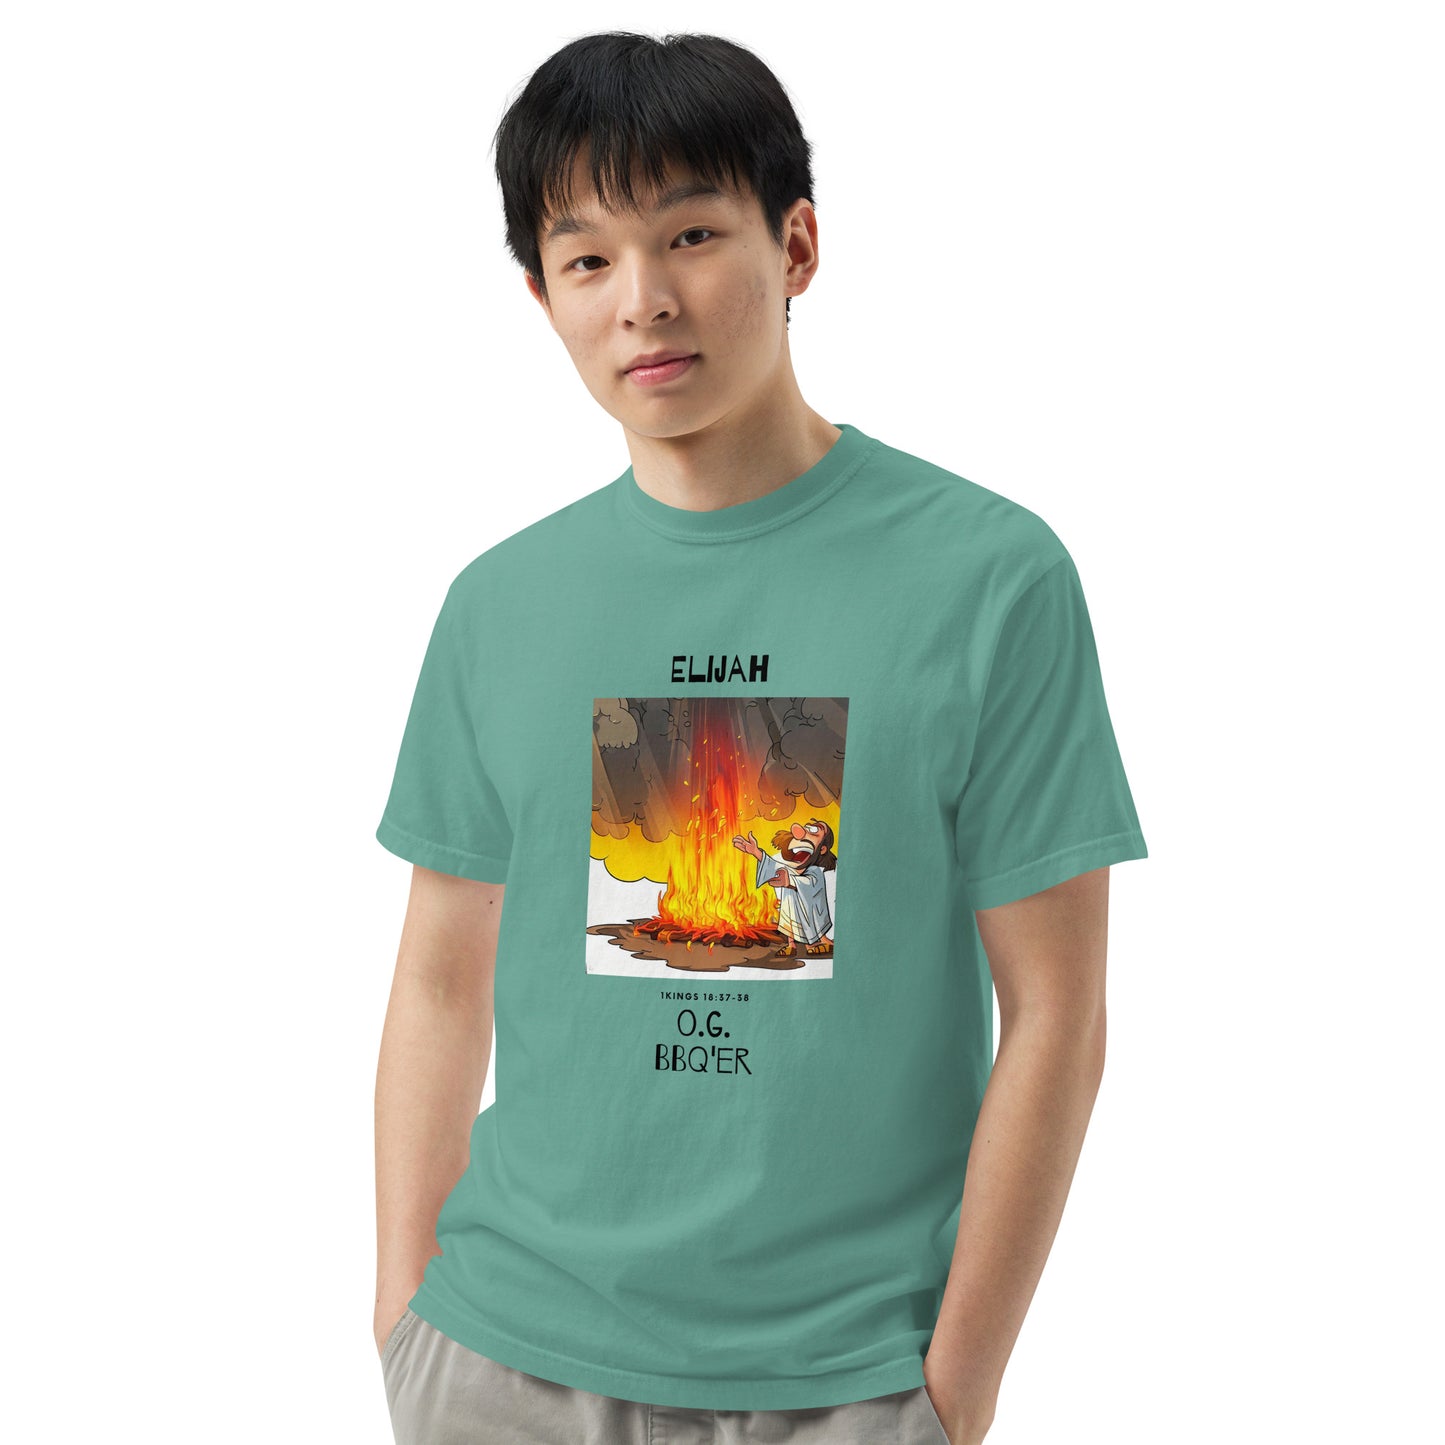 Elijah O.G. BBQ'er (Black Print) Men’s Comfort Colors T-Shirt